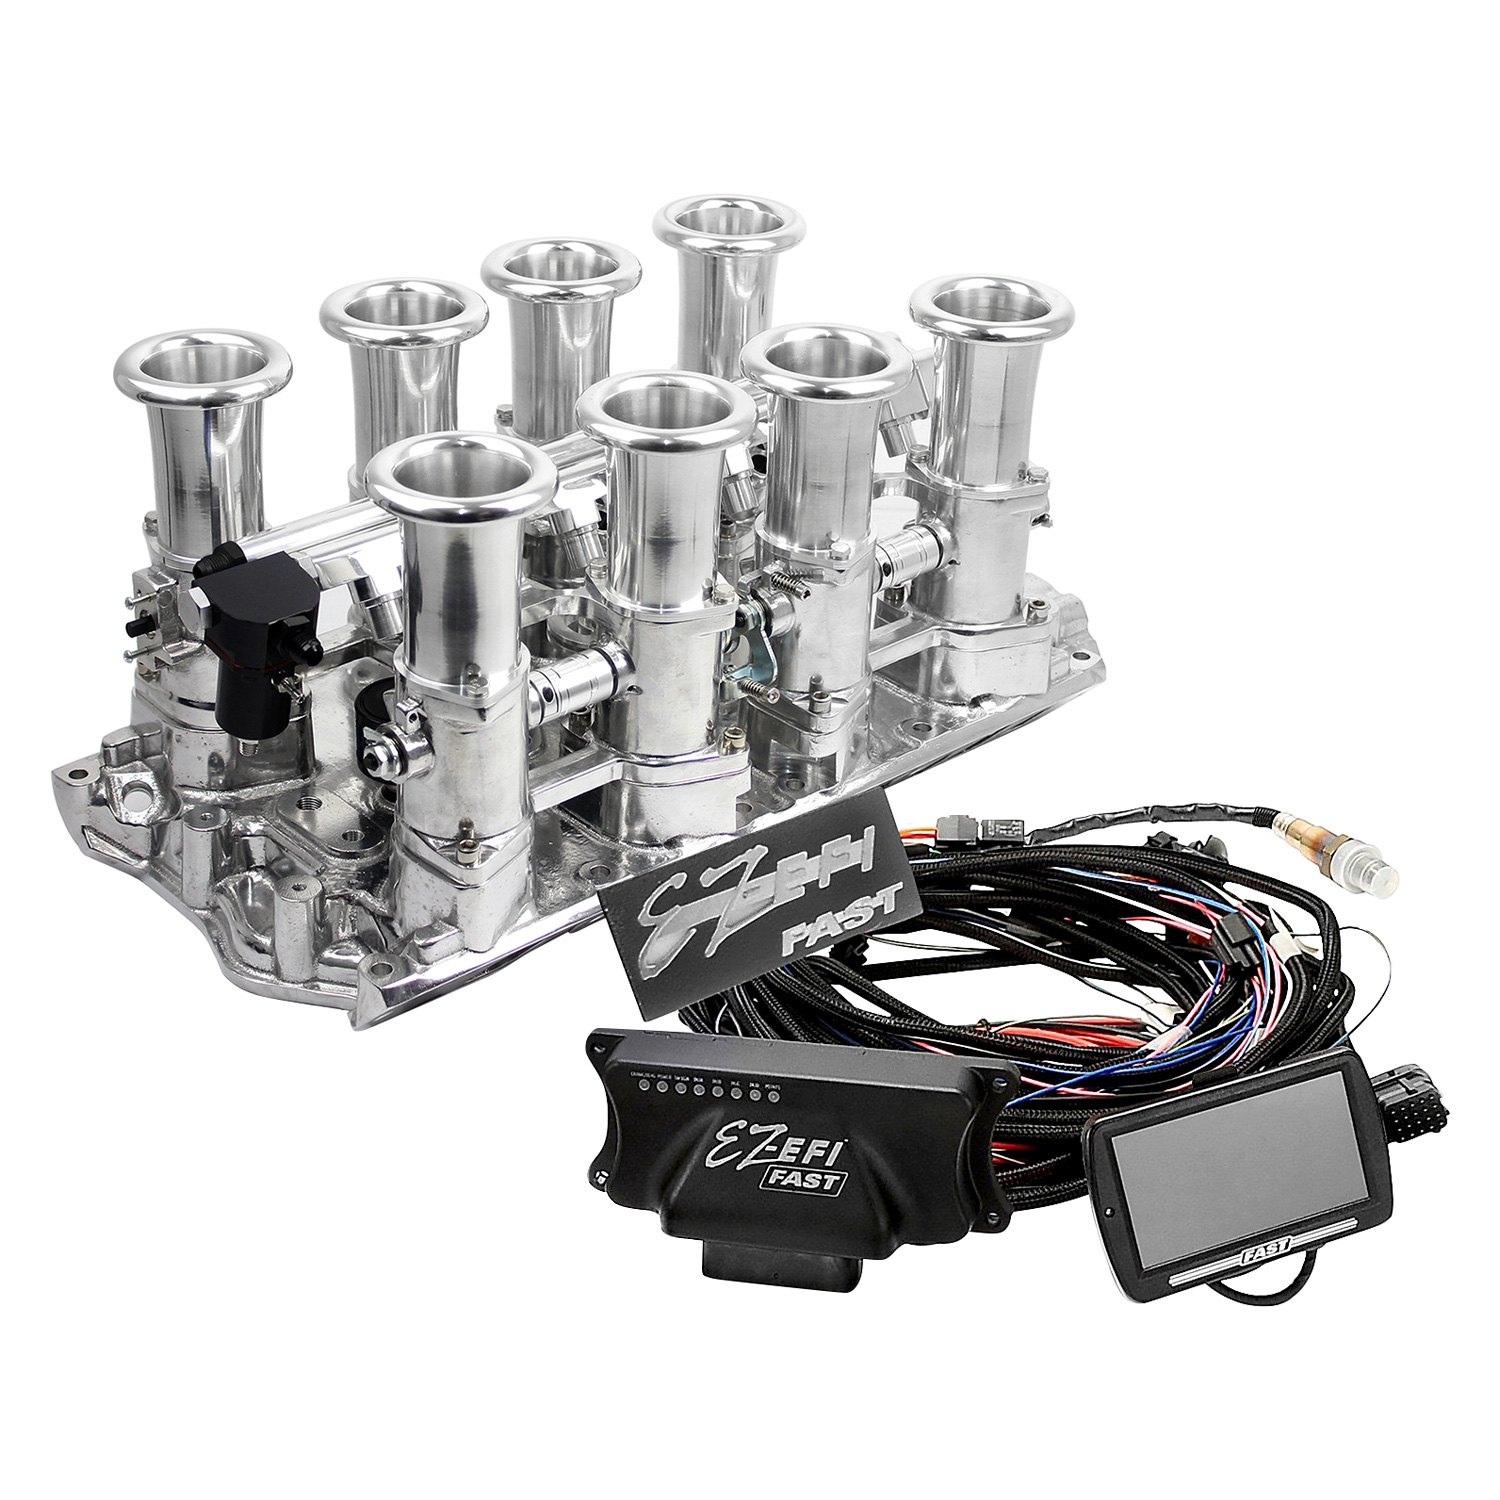 Fuel Injection System by Speedmaster ®. Oval Port Manifold & Fast Ez-Ef...